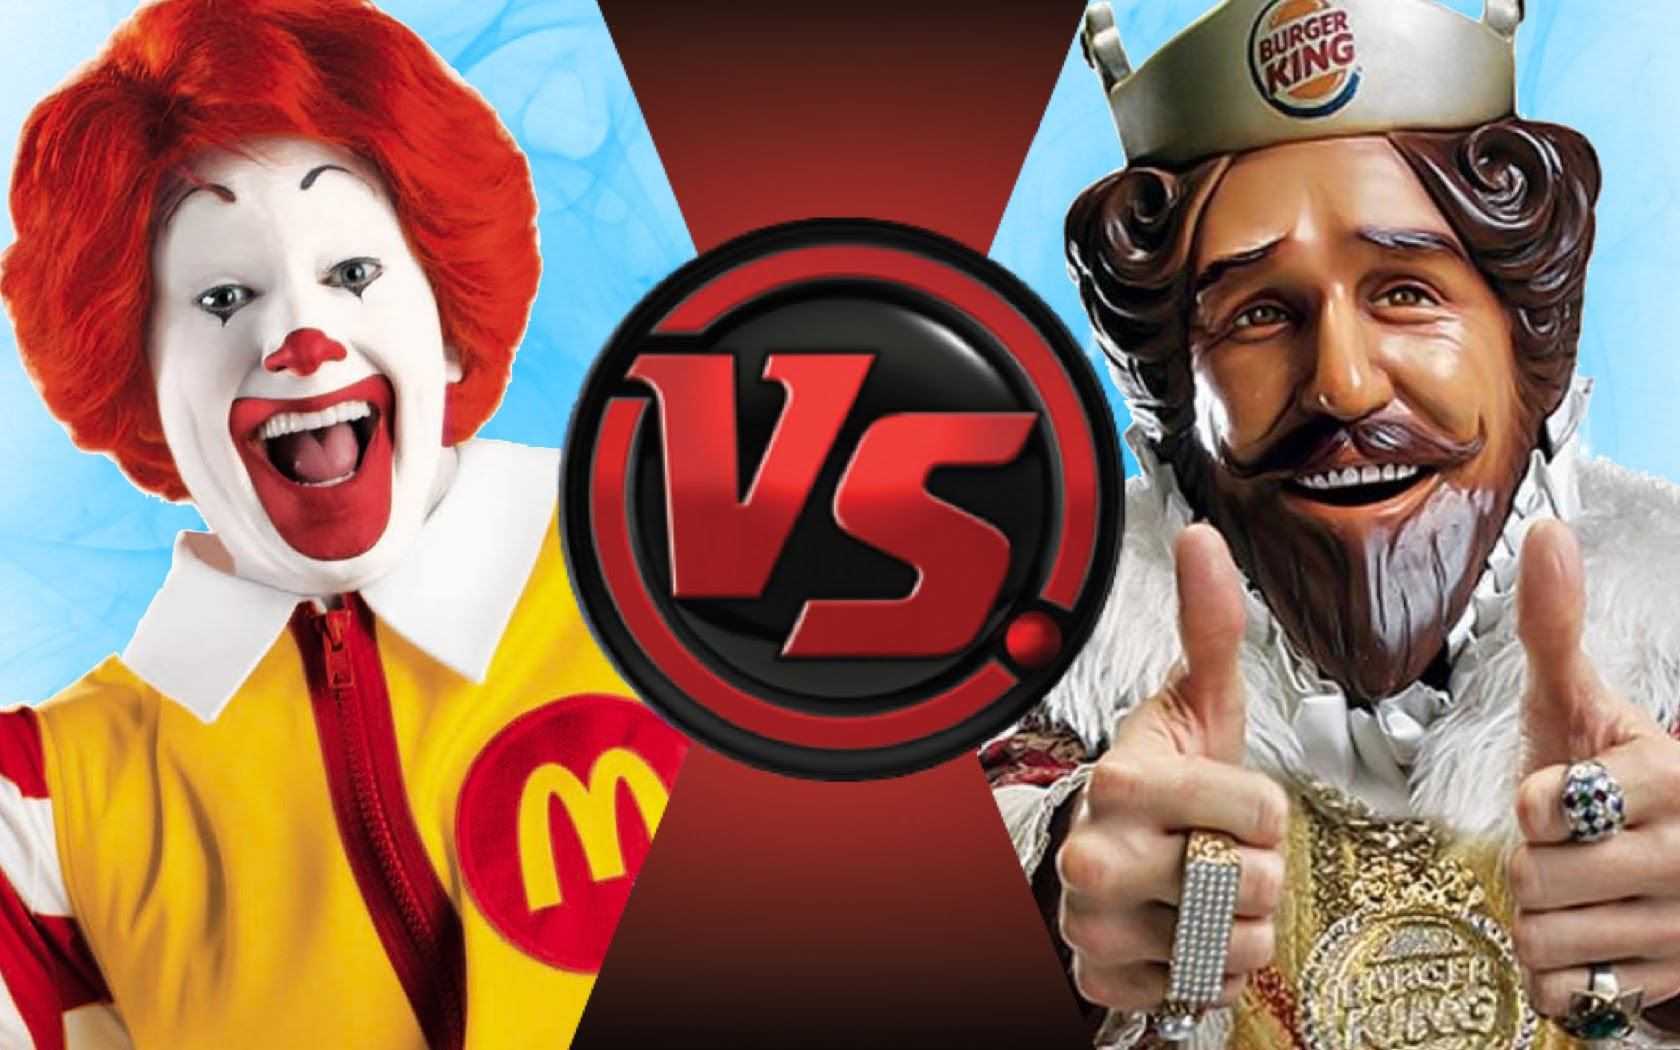 Персонажи бургер кинг. Рональд Макдональд и бургер Кинг. Рональд Макдональд против бургер Кинга. Реклама Рональд Макдональд и бургер Кинг. Бургер Кинг против Макдональдса.